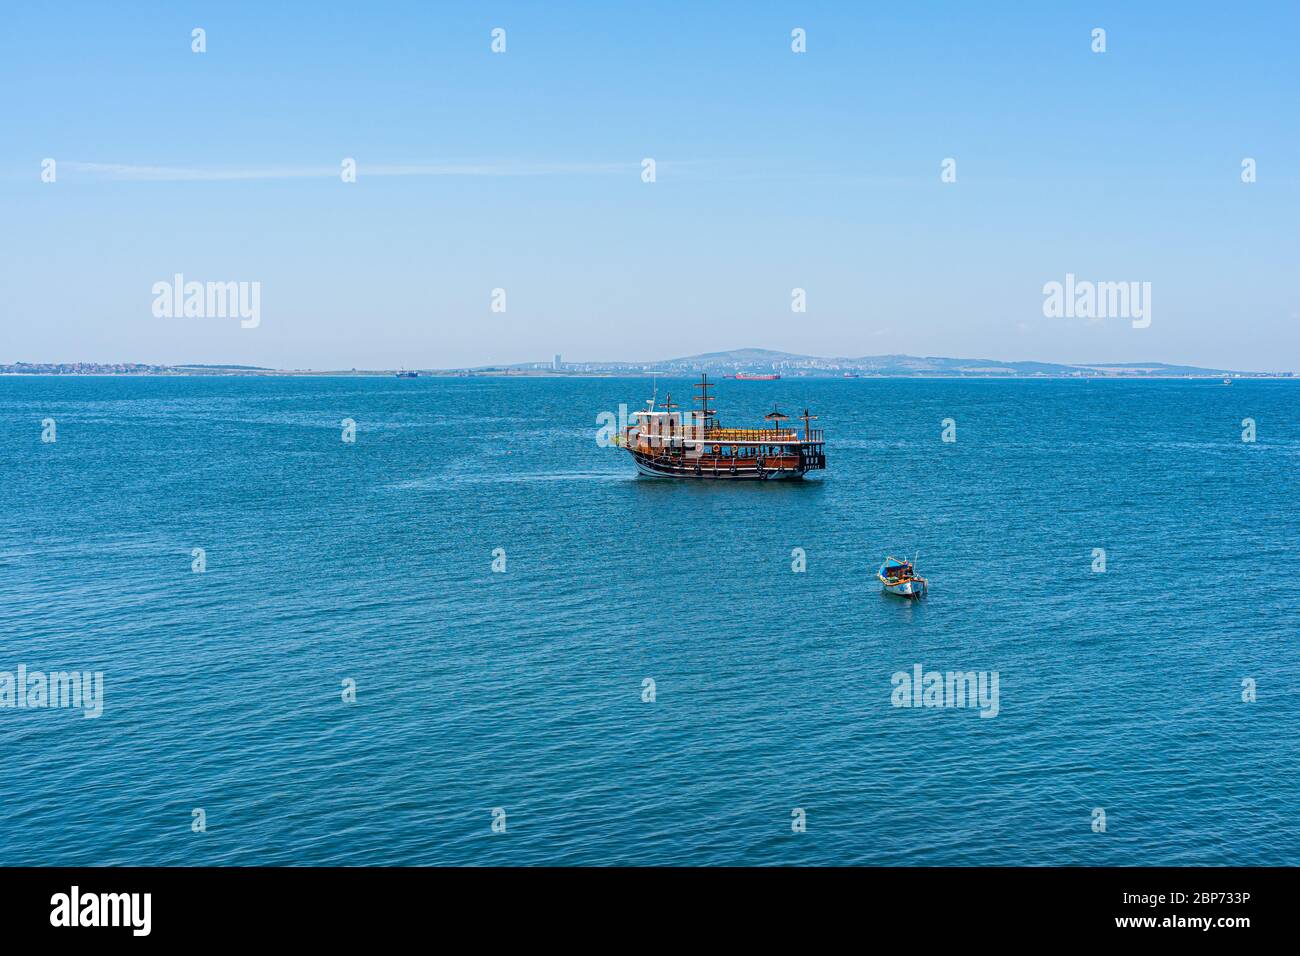 ST. ANASTASIA ISLAND, BULGARIA - JUNE 23, 2019: Pleasure boat in the Burgas Bay of the Black Sea. Sea view from the side of the island of St. Anastasia. Stock Photo